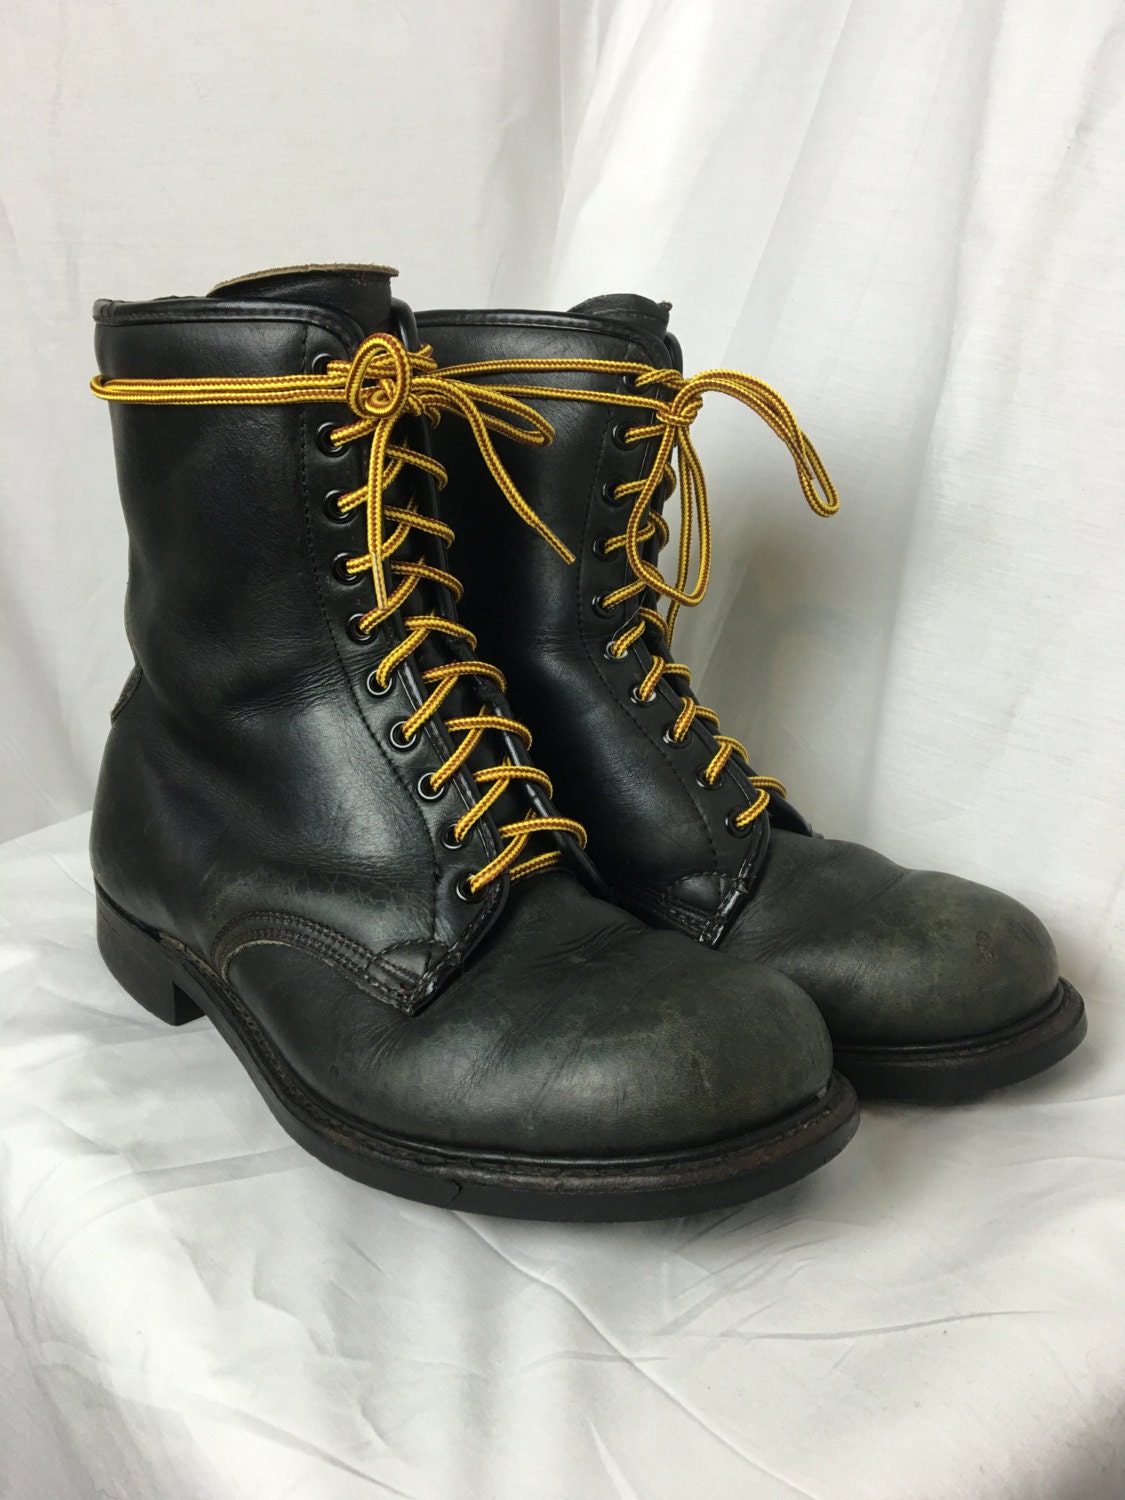 Vintage Knapp Boots 1950s Size 7 1/2 D Vintage Black by 2ndSupply